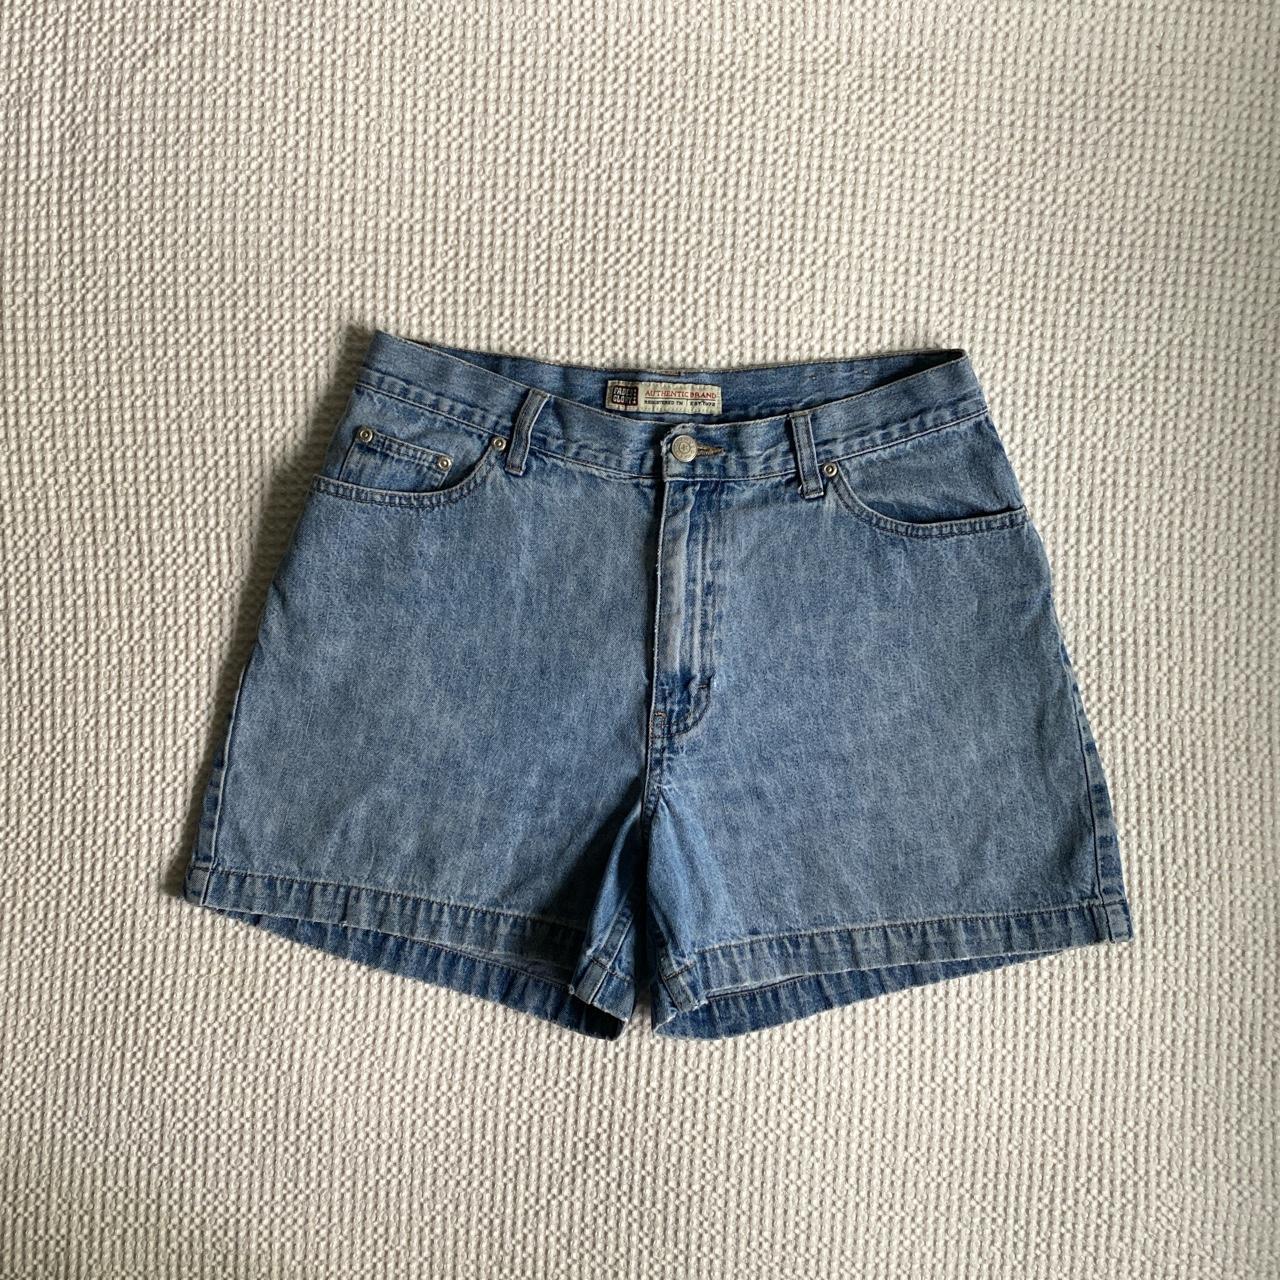 faded glory jean shorts ★ -ˏˋ shipping: $6.19... - Depop